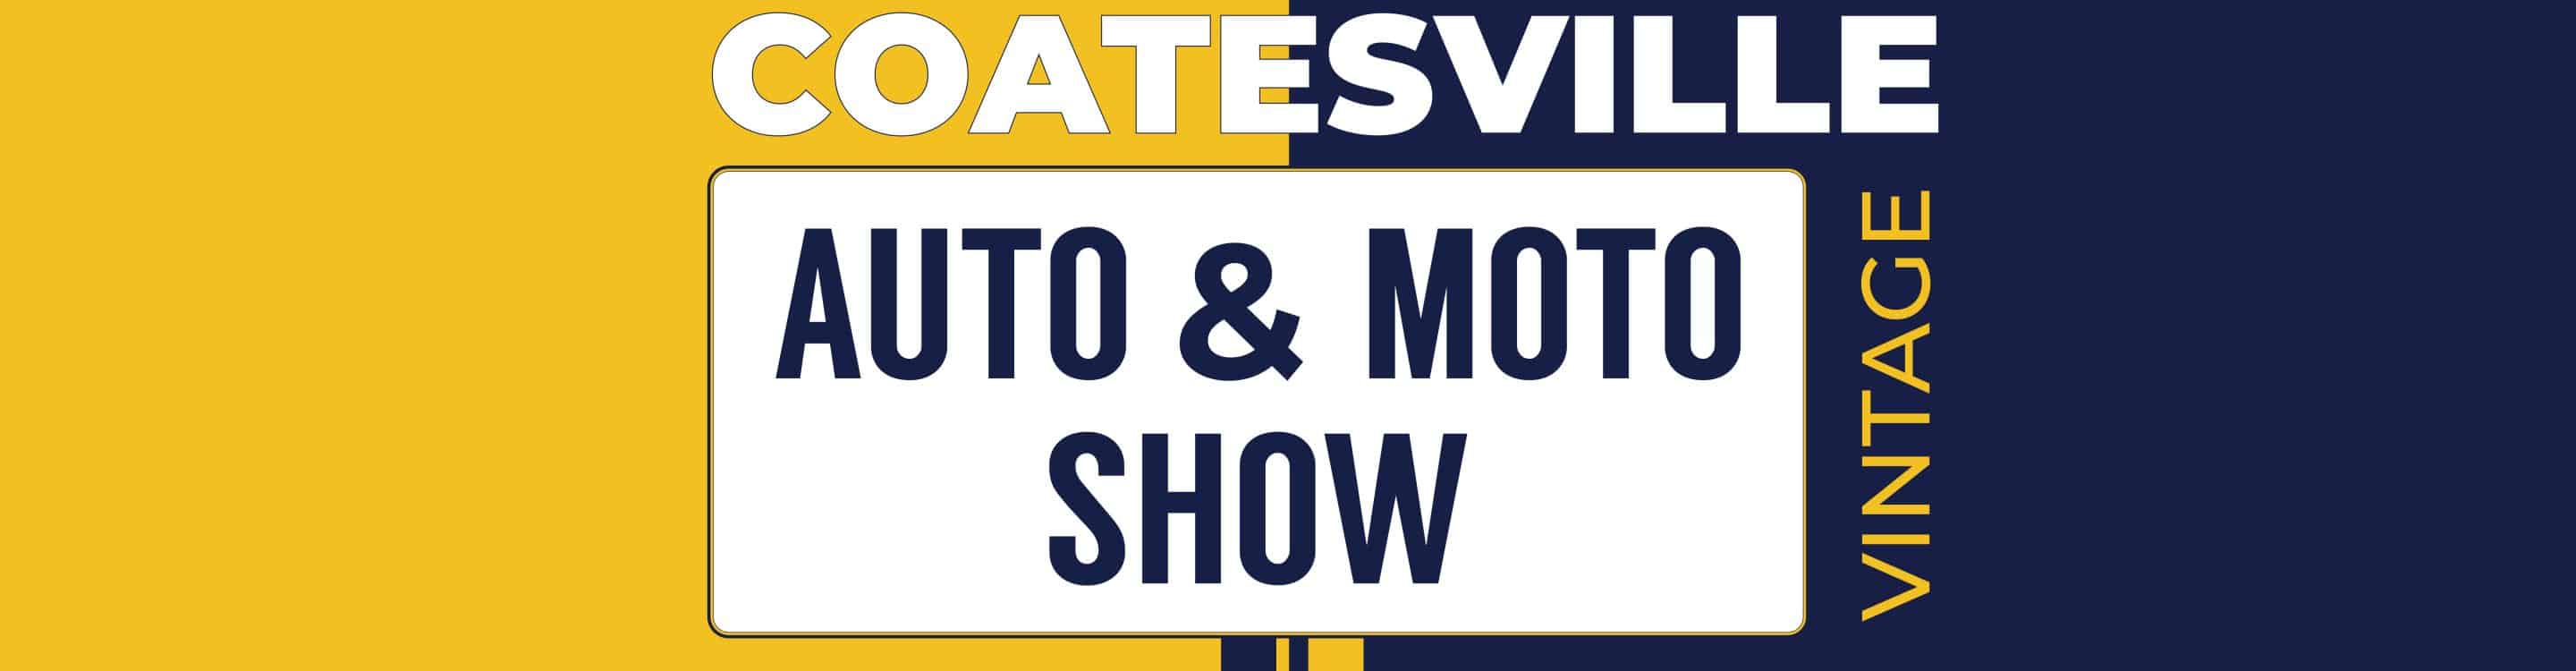 The Coatesville Auto & Moto Show Registration